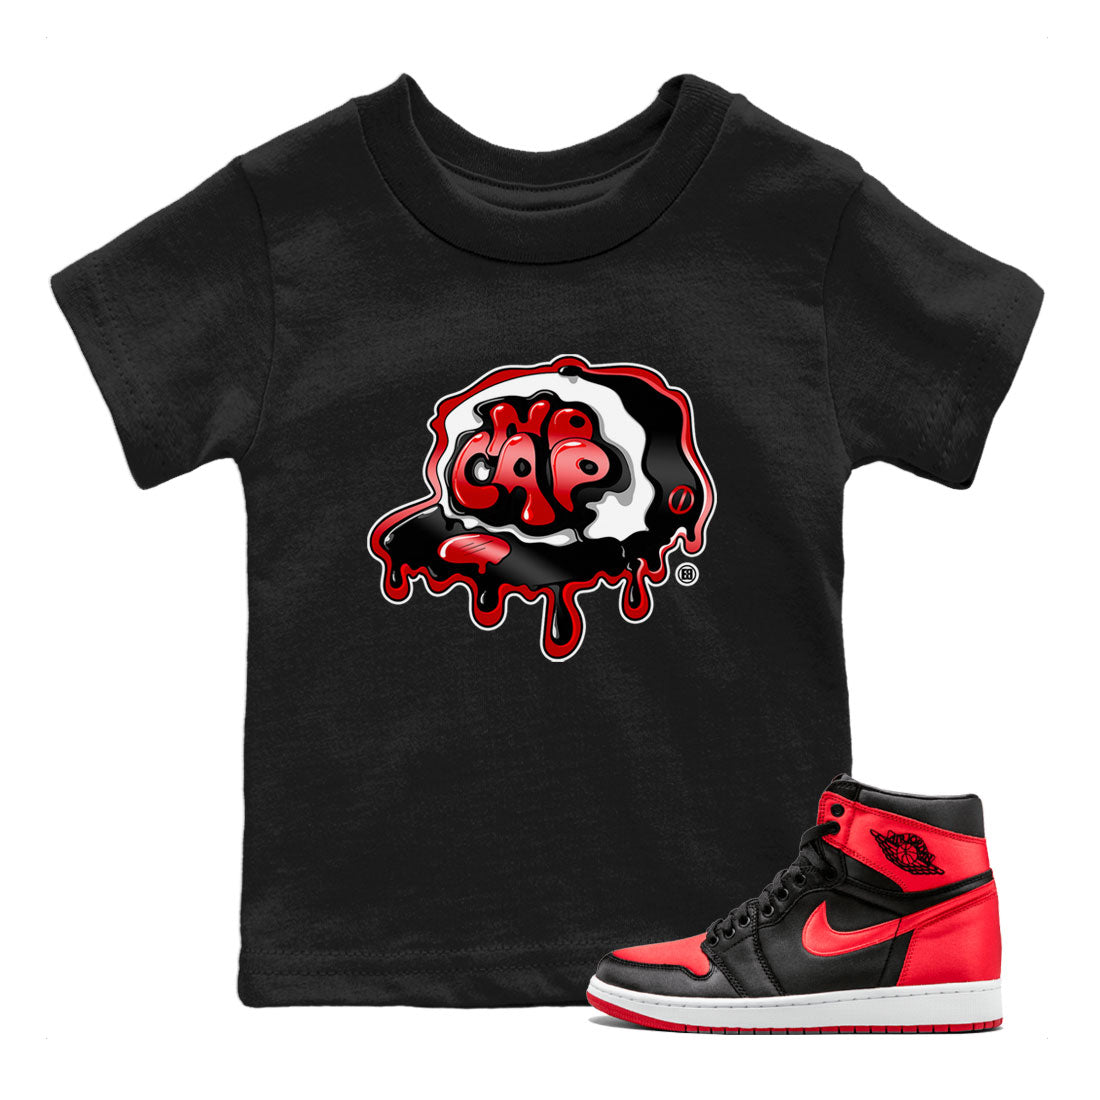 Air Jordan 1 Retro High OG Satin Bred shirt to match jordans No Cap Streetwear Sneaker Shirt Air Jordan 1 Satin Bred Drip Gear Zone Sneaker Matching Clothing Baby Toddler Kids Black 1 T-Shirt